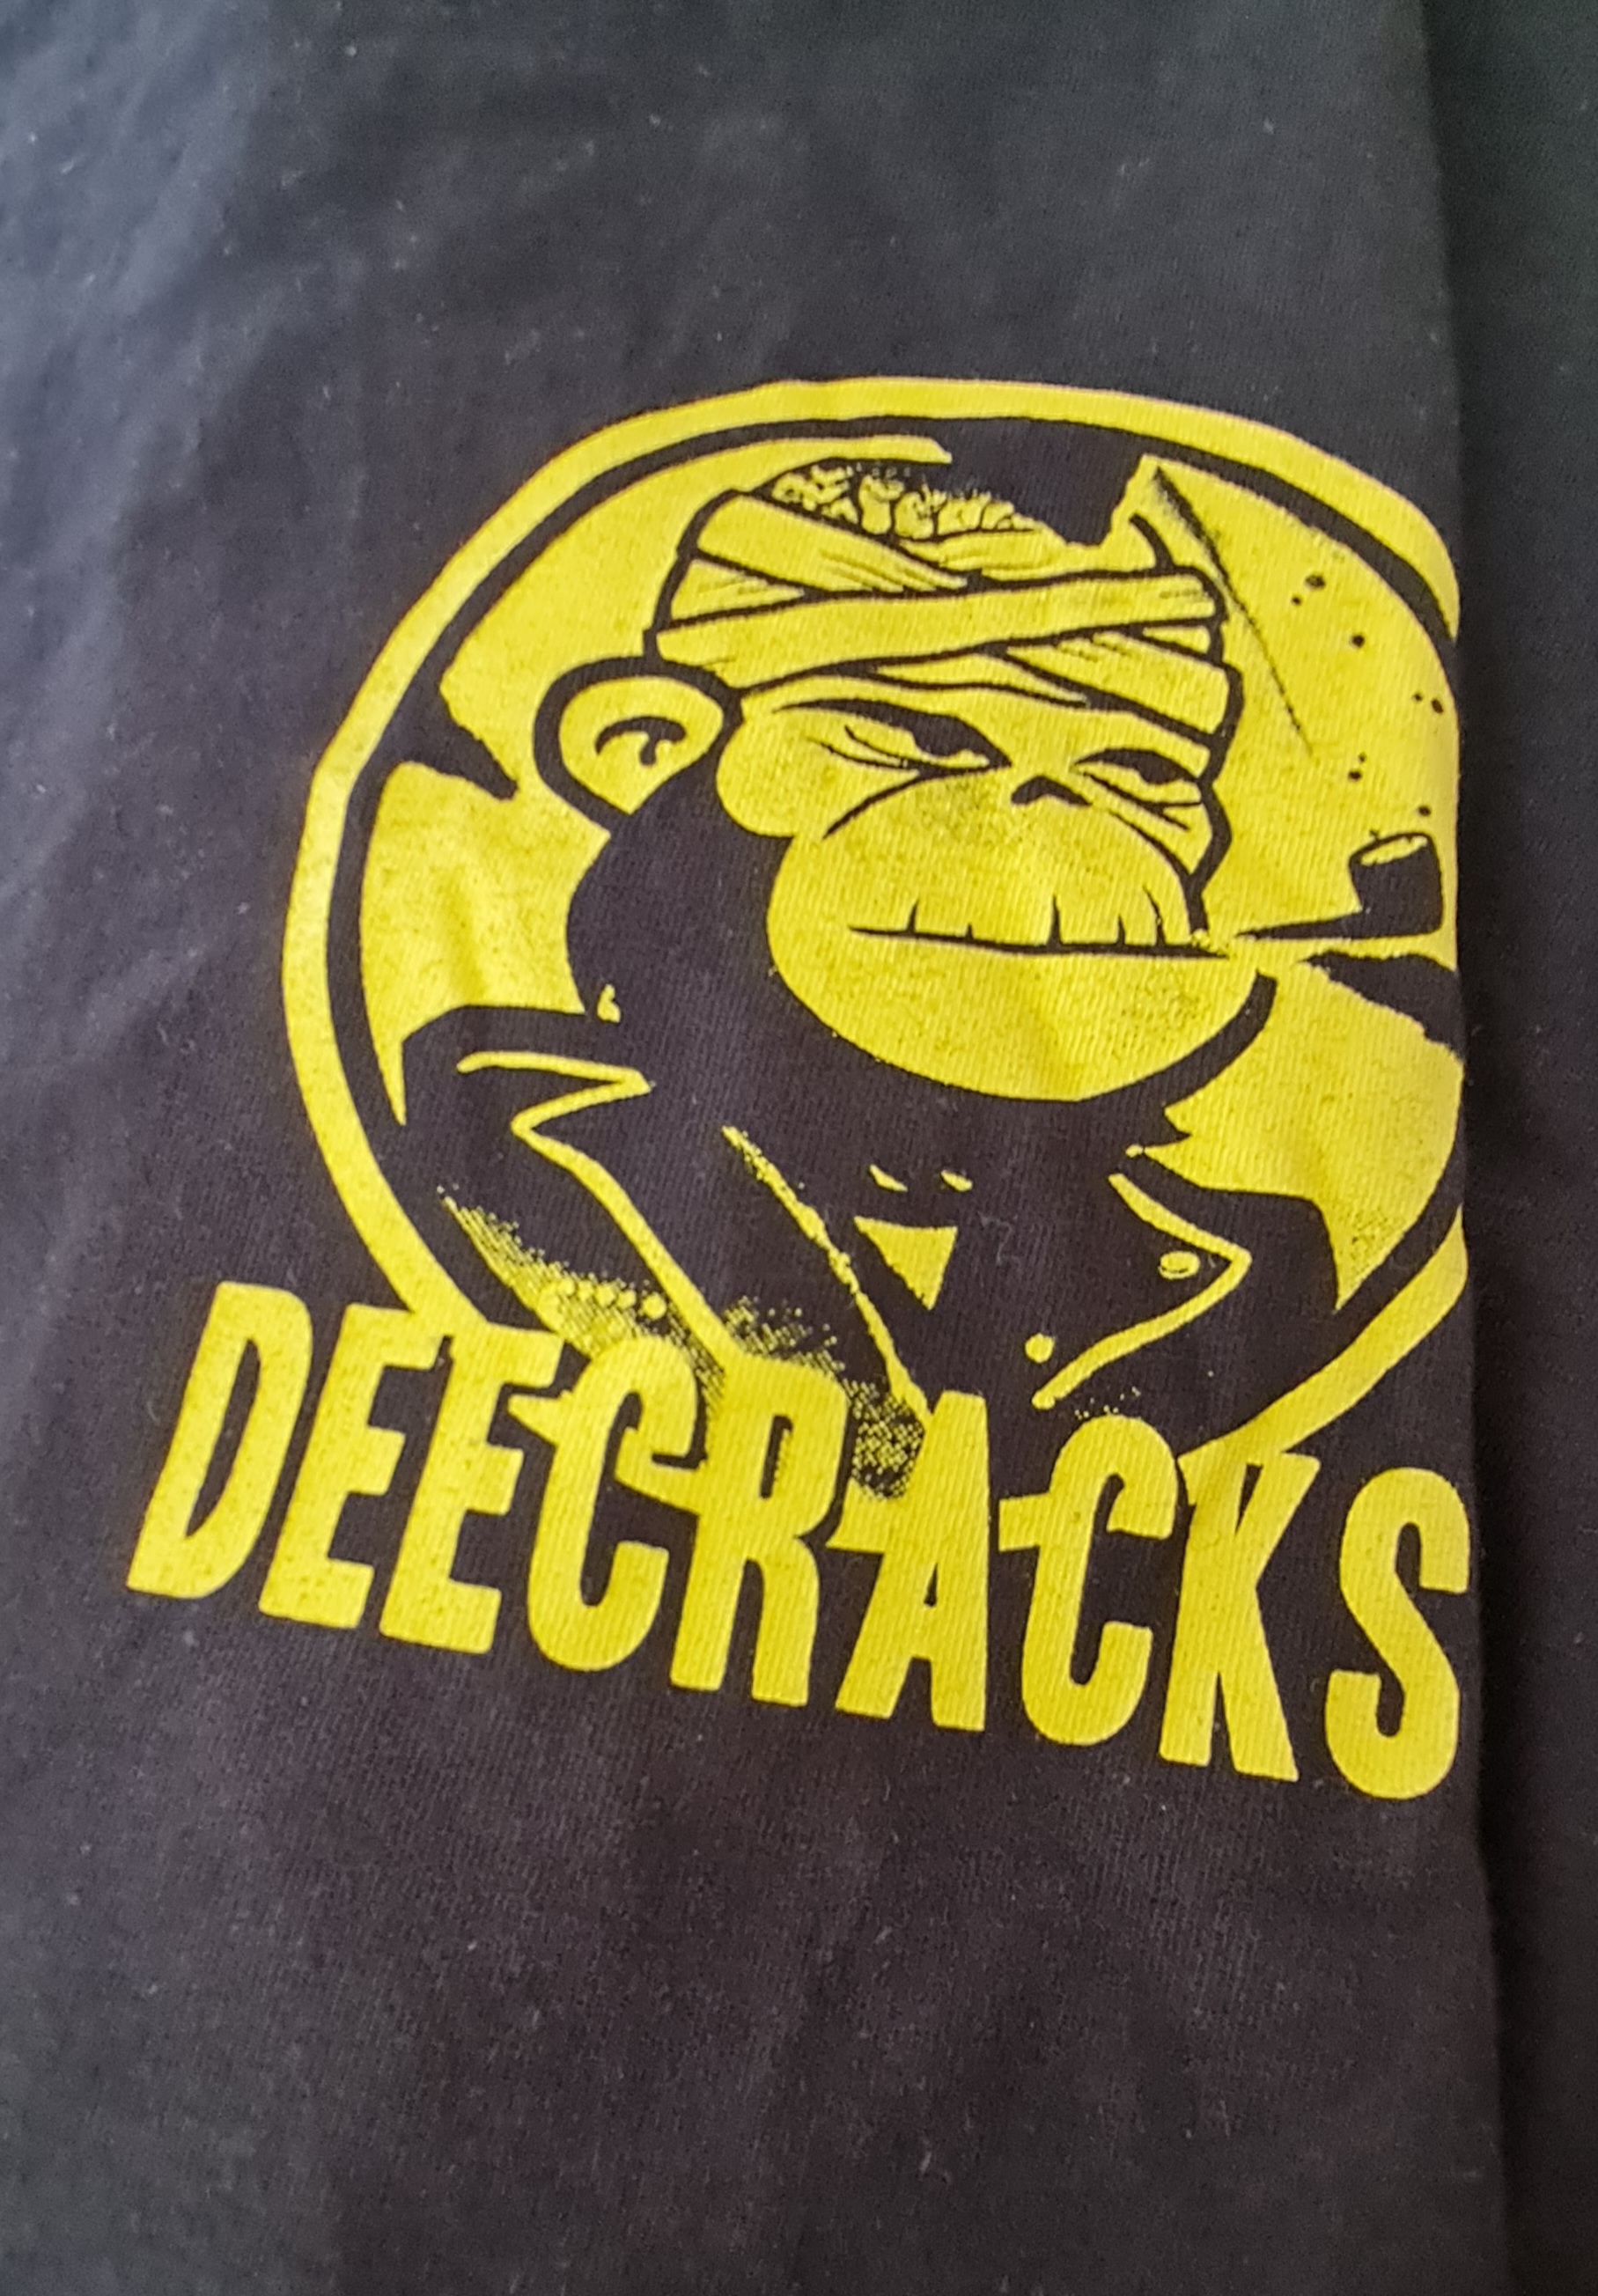 a yellow logo on a black shirt